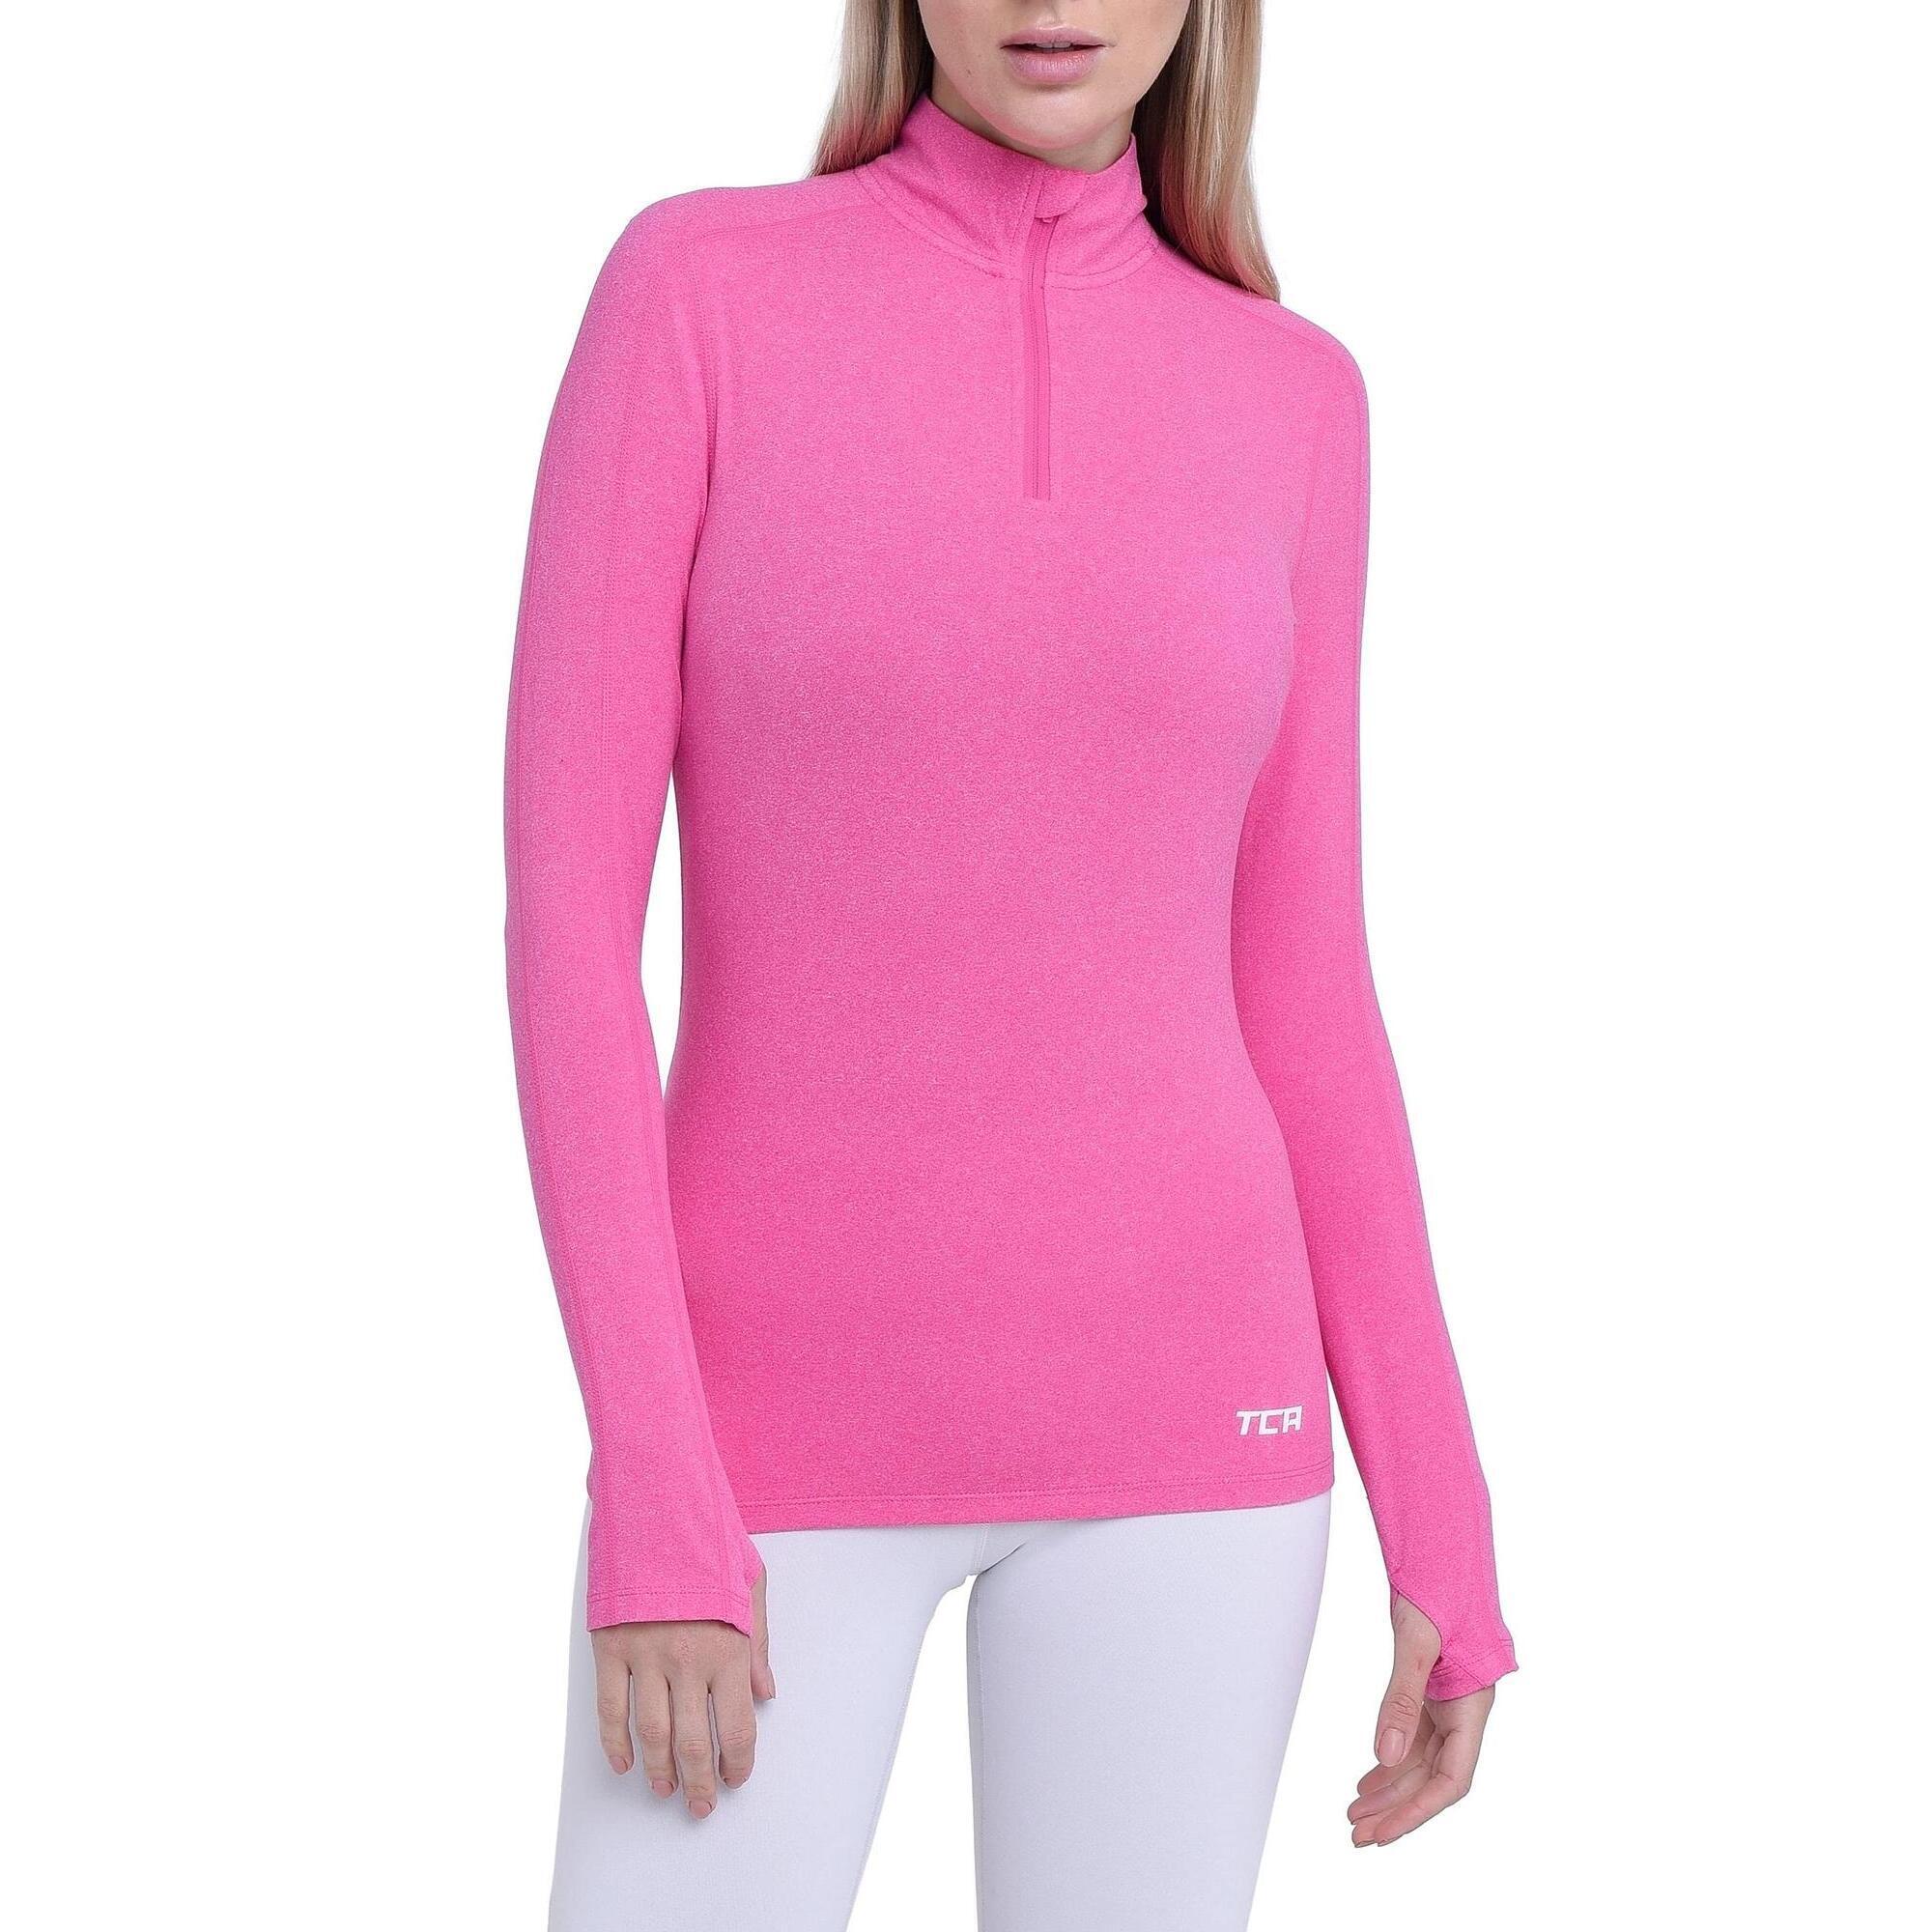 Women's All Season Long Sleeve Running Top - Liquid Pink Heather 1/5